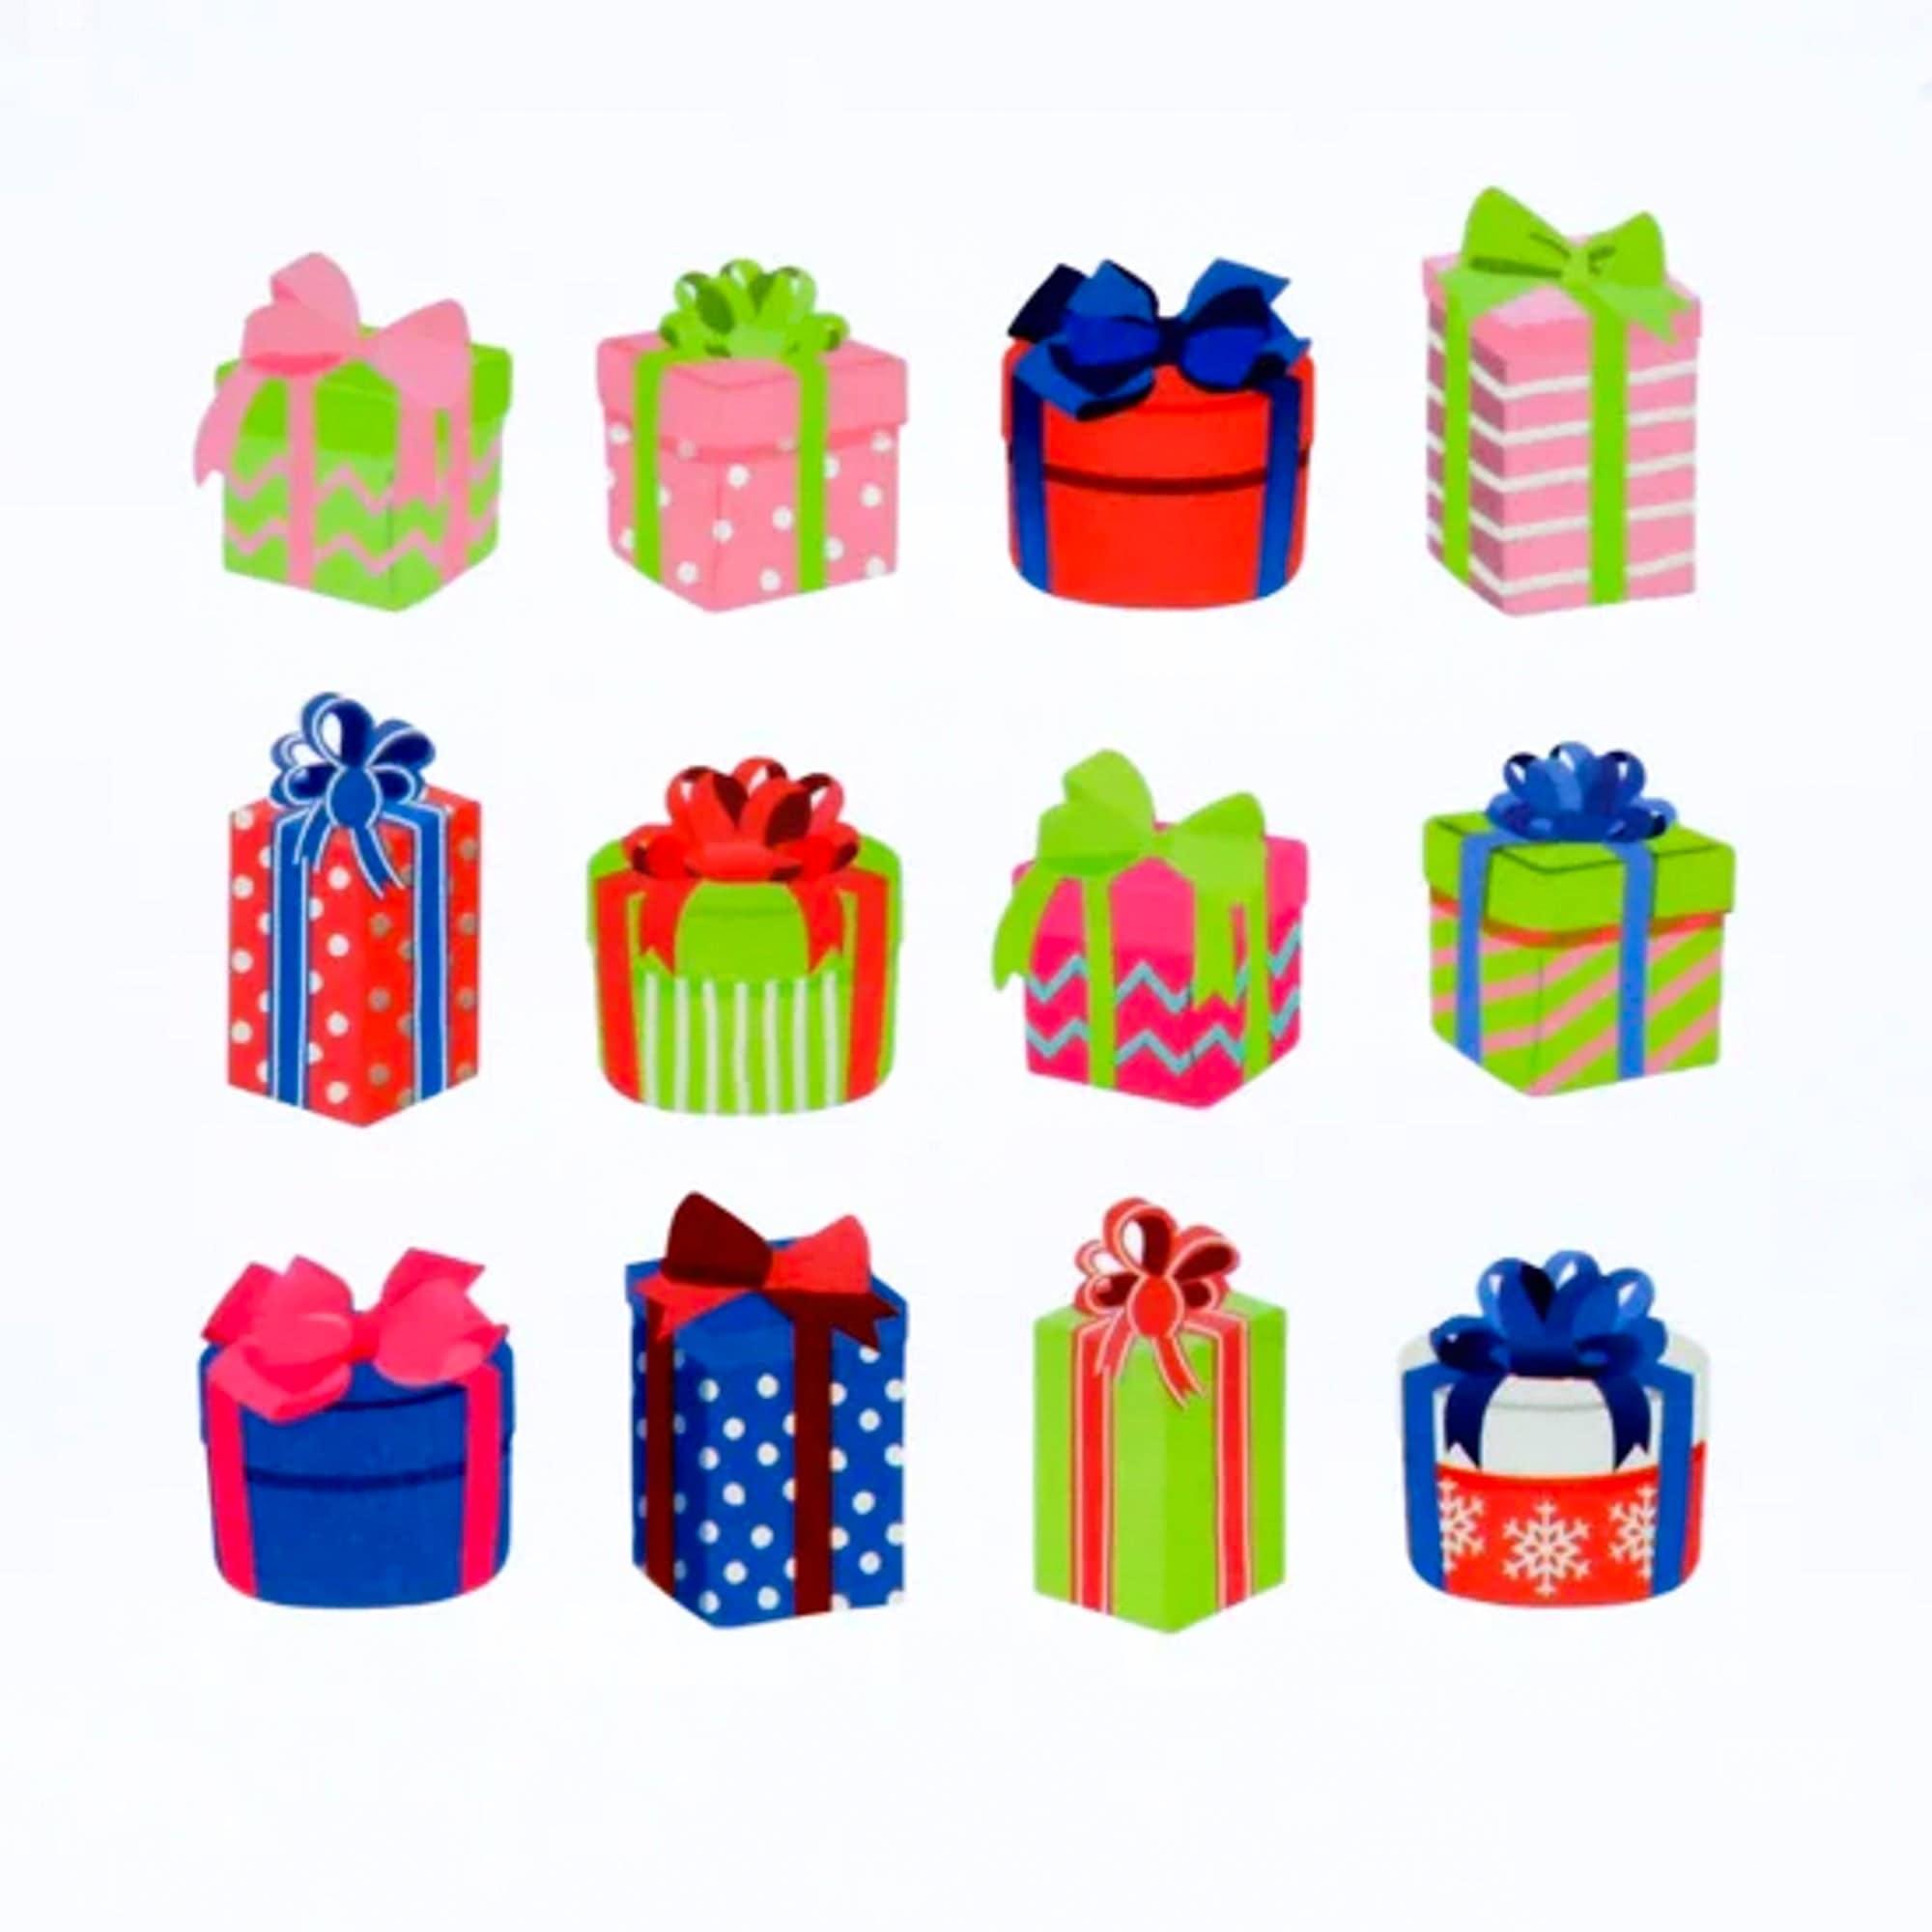 Gift Ⅱ Washi Tape Sticker Roll - Bande - Komorebi Stationery